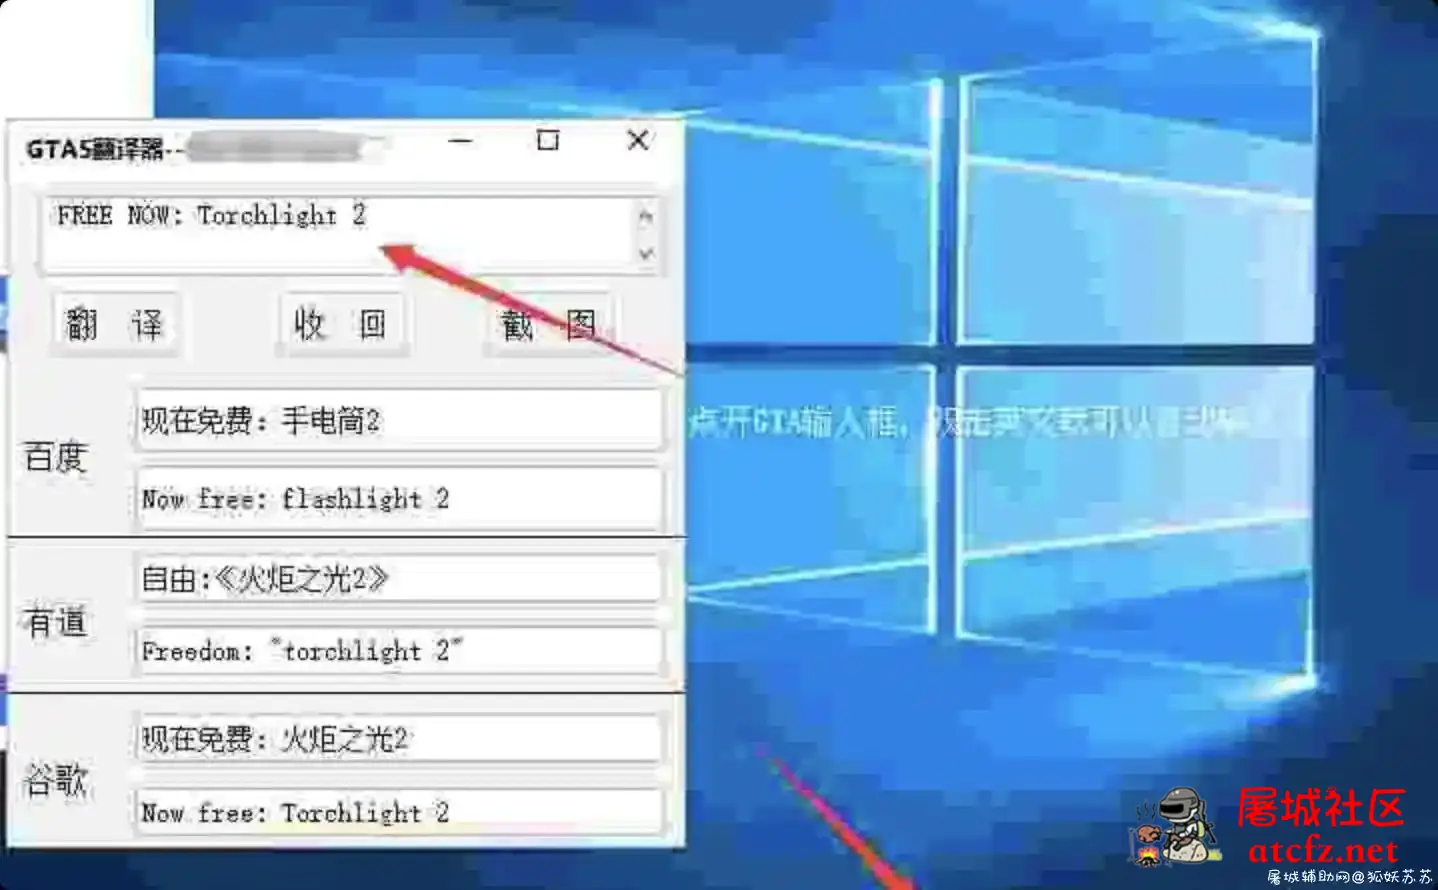 GTA5自动翻译器 自动输入内容 v0.3 新增搜狗翻译 屠城辅助网www.tcfz1.com4279